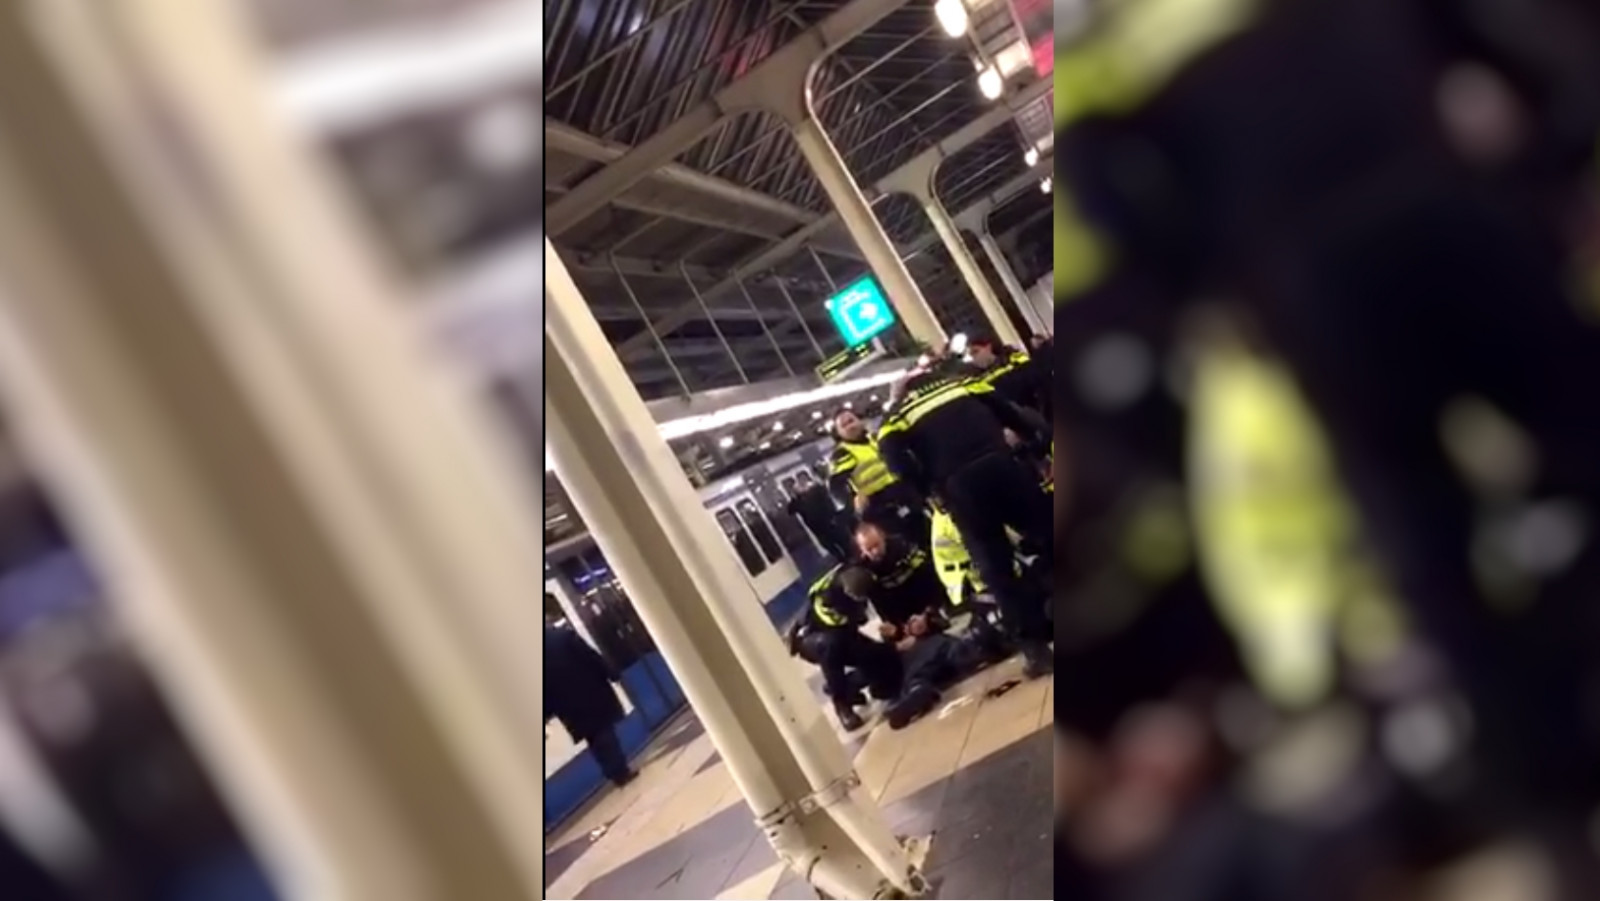 station Amstel Amstelstation aanhouding drie mannen aangehouden mishandeling monteur